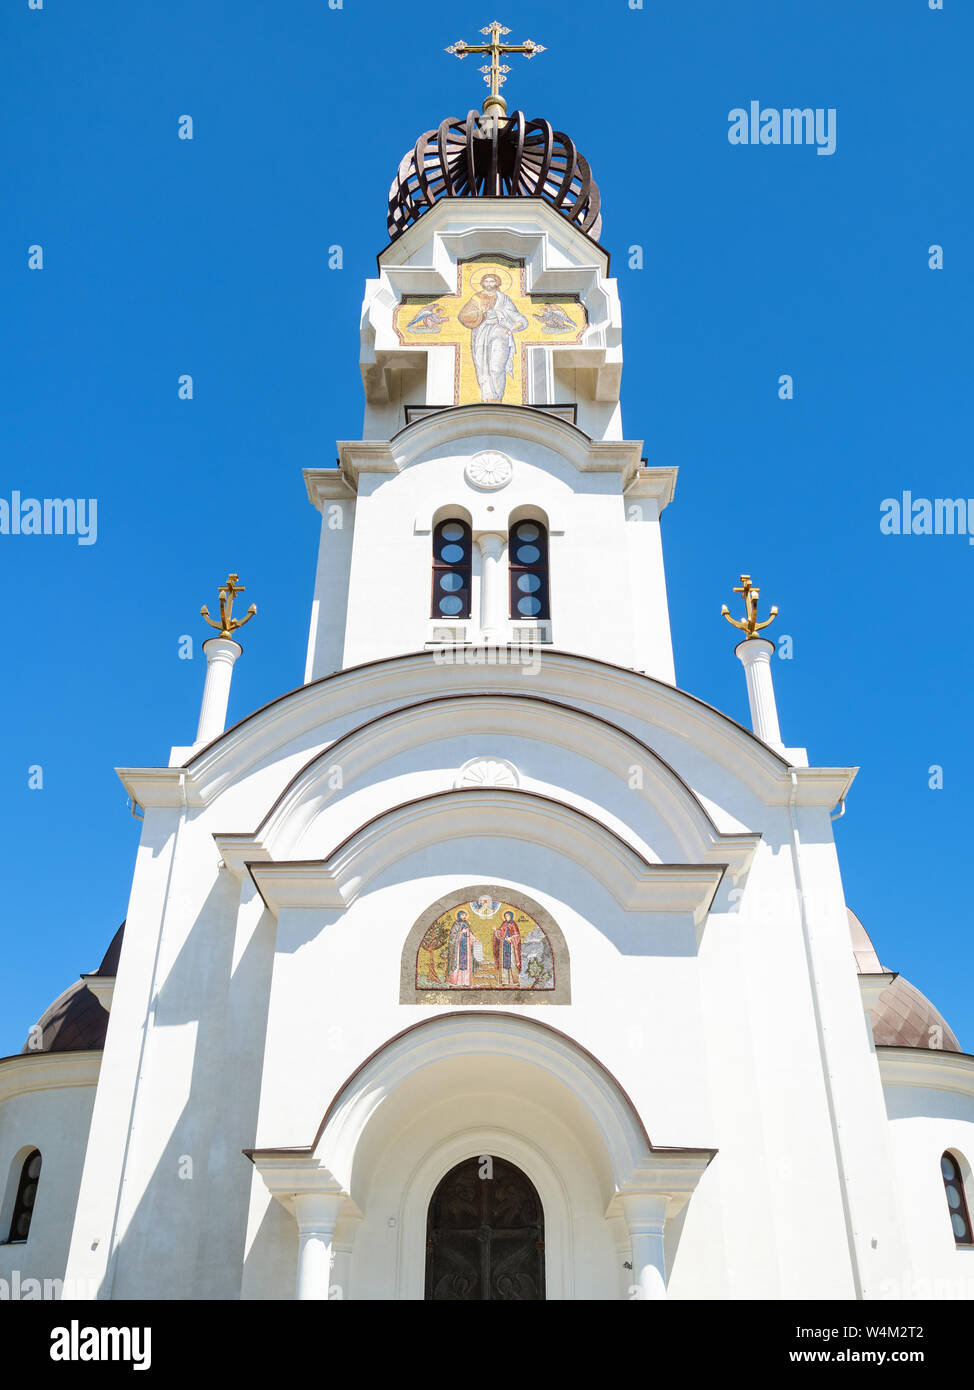 NOVOROSSIYSK, RUSSIA - JULY 7, 2019: facade of Church of St Peter and St Fevronia near Chapel of St Nicholas the Wonderworker on Admiral Serebryakov E Stock Photo